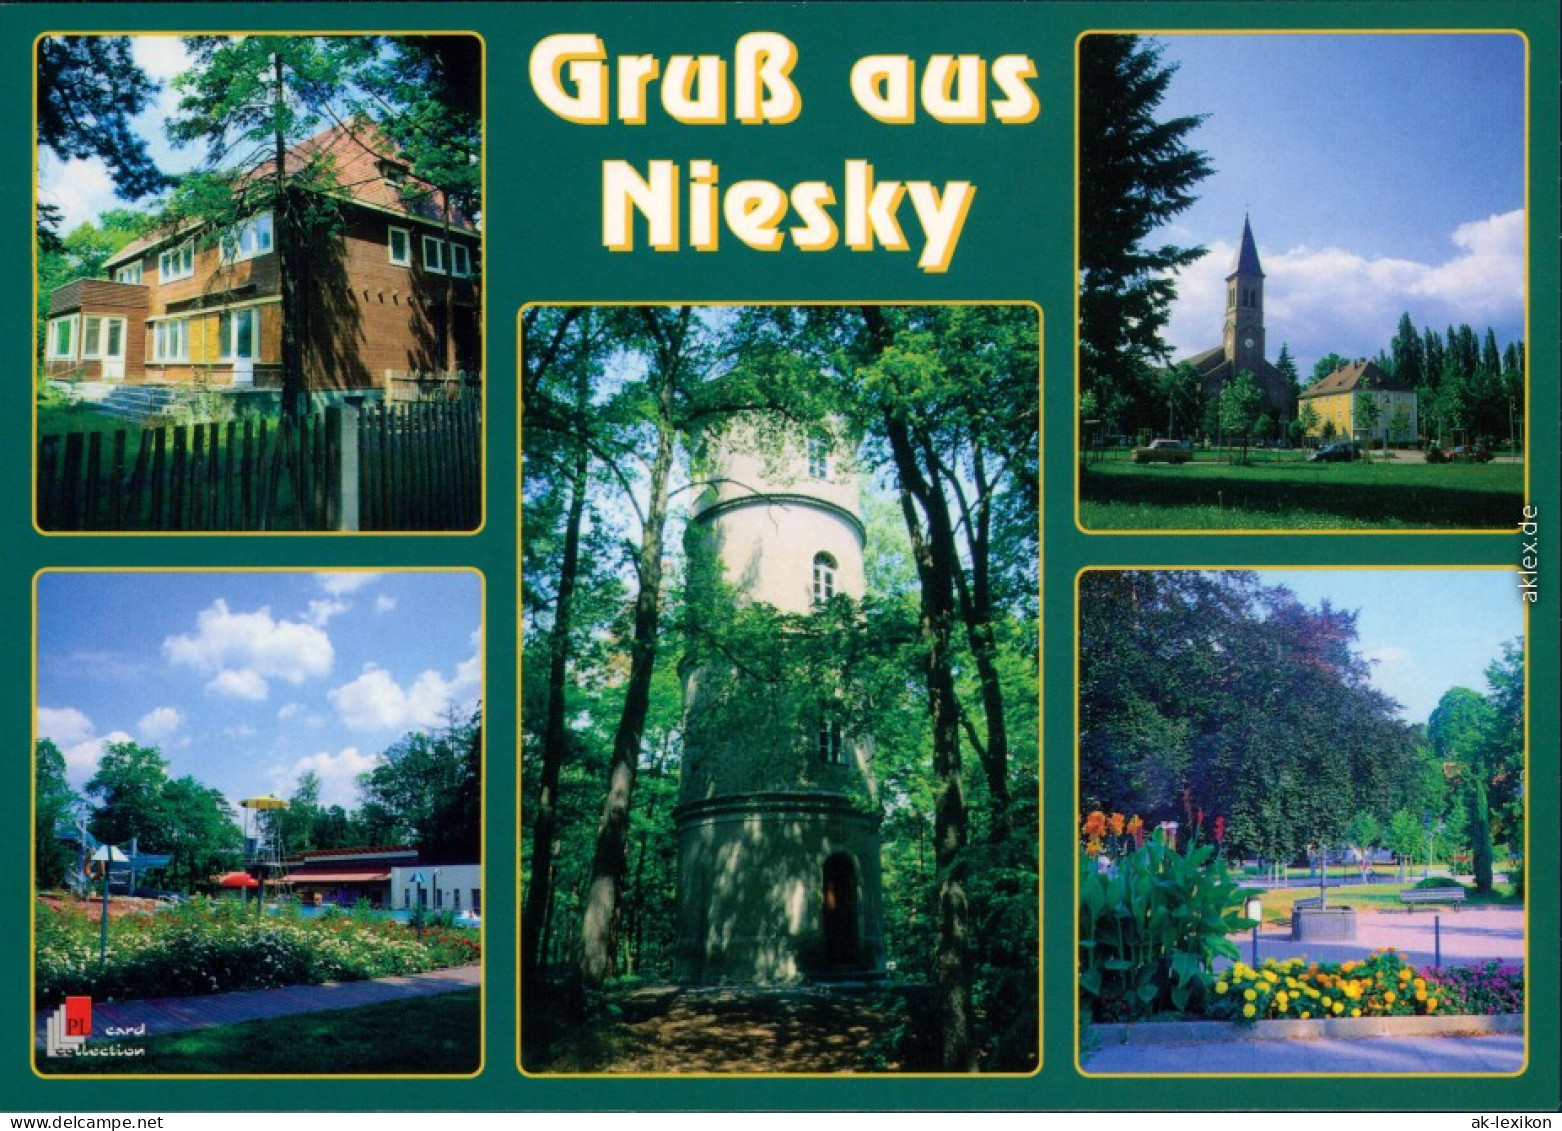 Niesky Niska Wachsmann-Haus, Zinzendorfplatz, Wartturm, Waldbad, Brunnen 1995 - Niesky